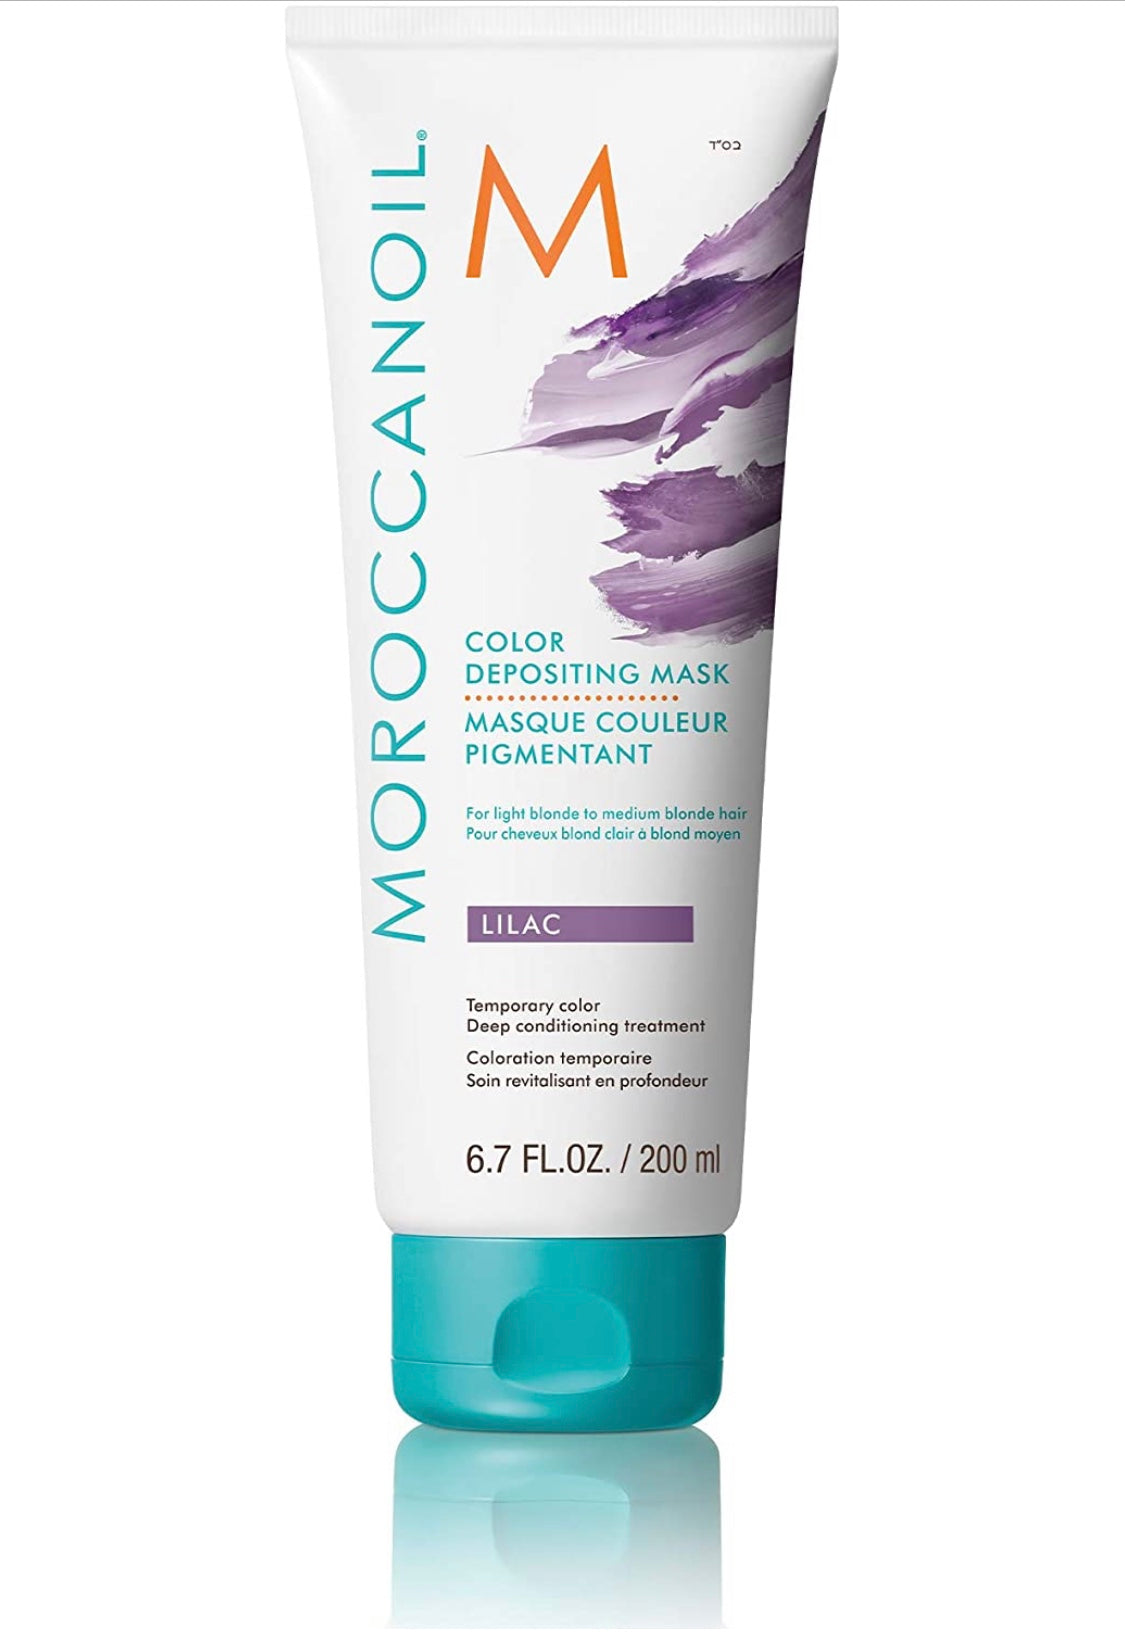 Moroccanoil - Color depositing mask Lilac  6.7 fl. oz./ 200 ml